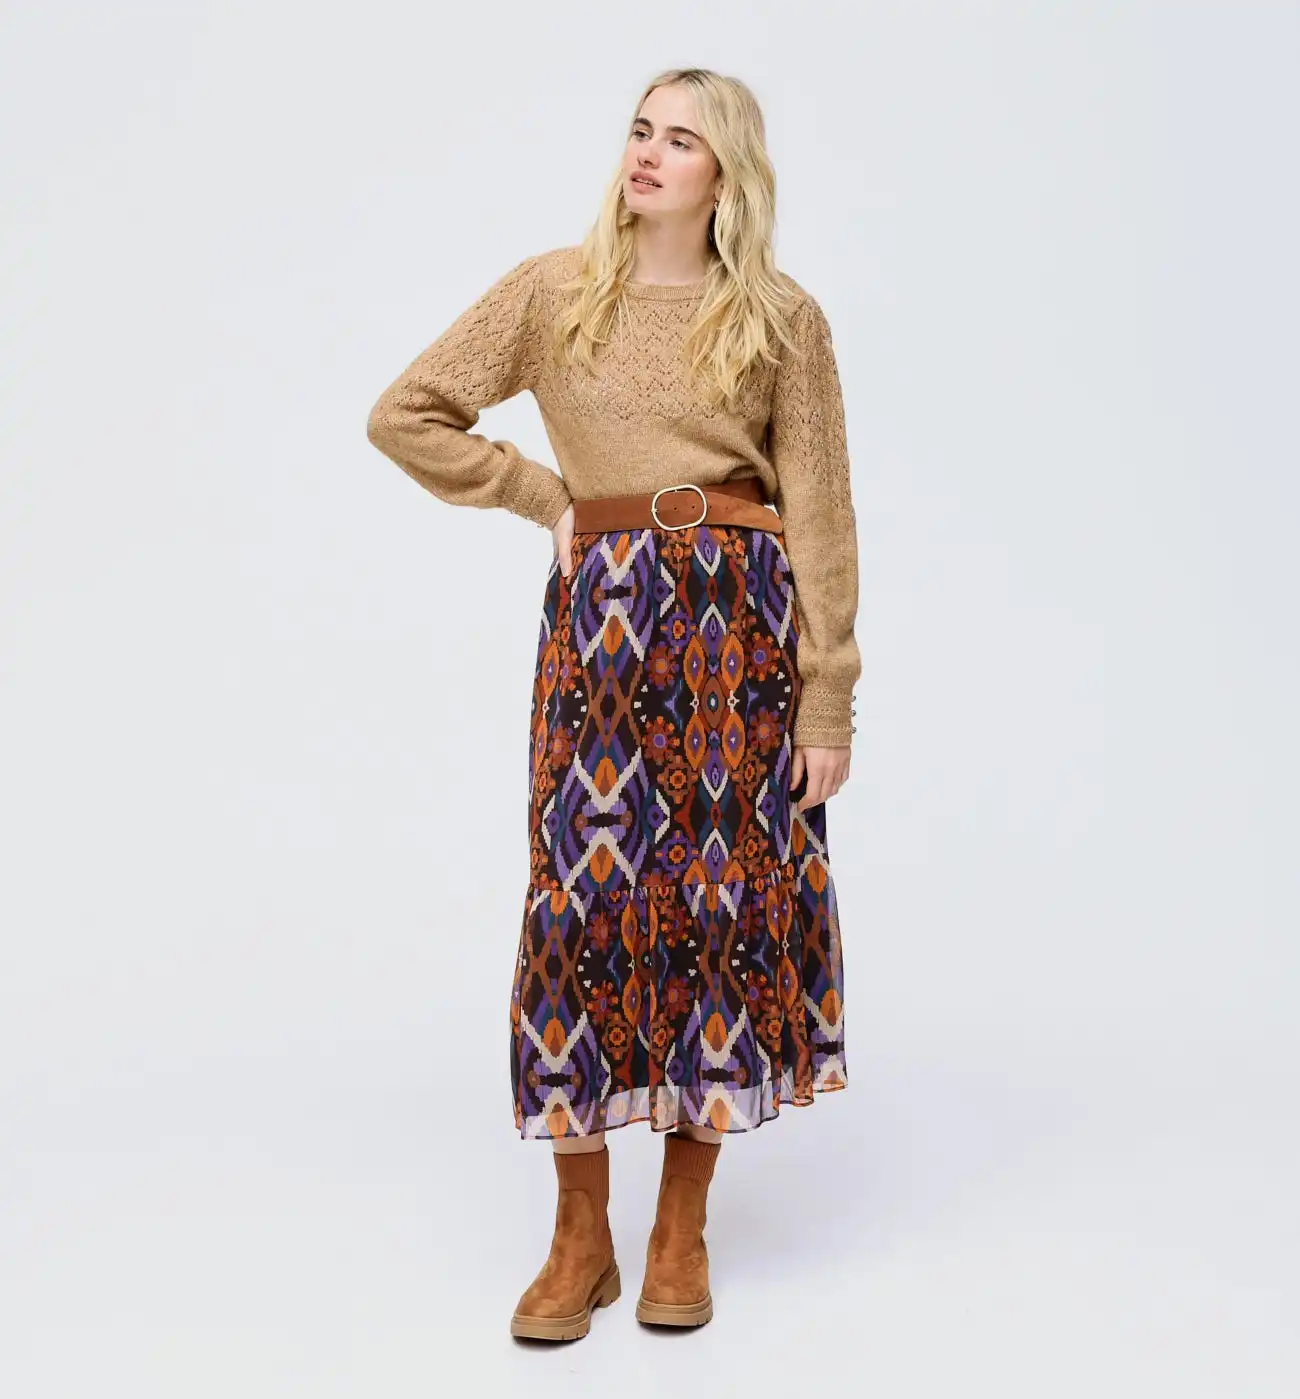 Patterned frilly skirt